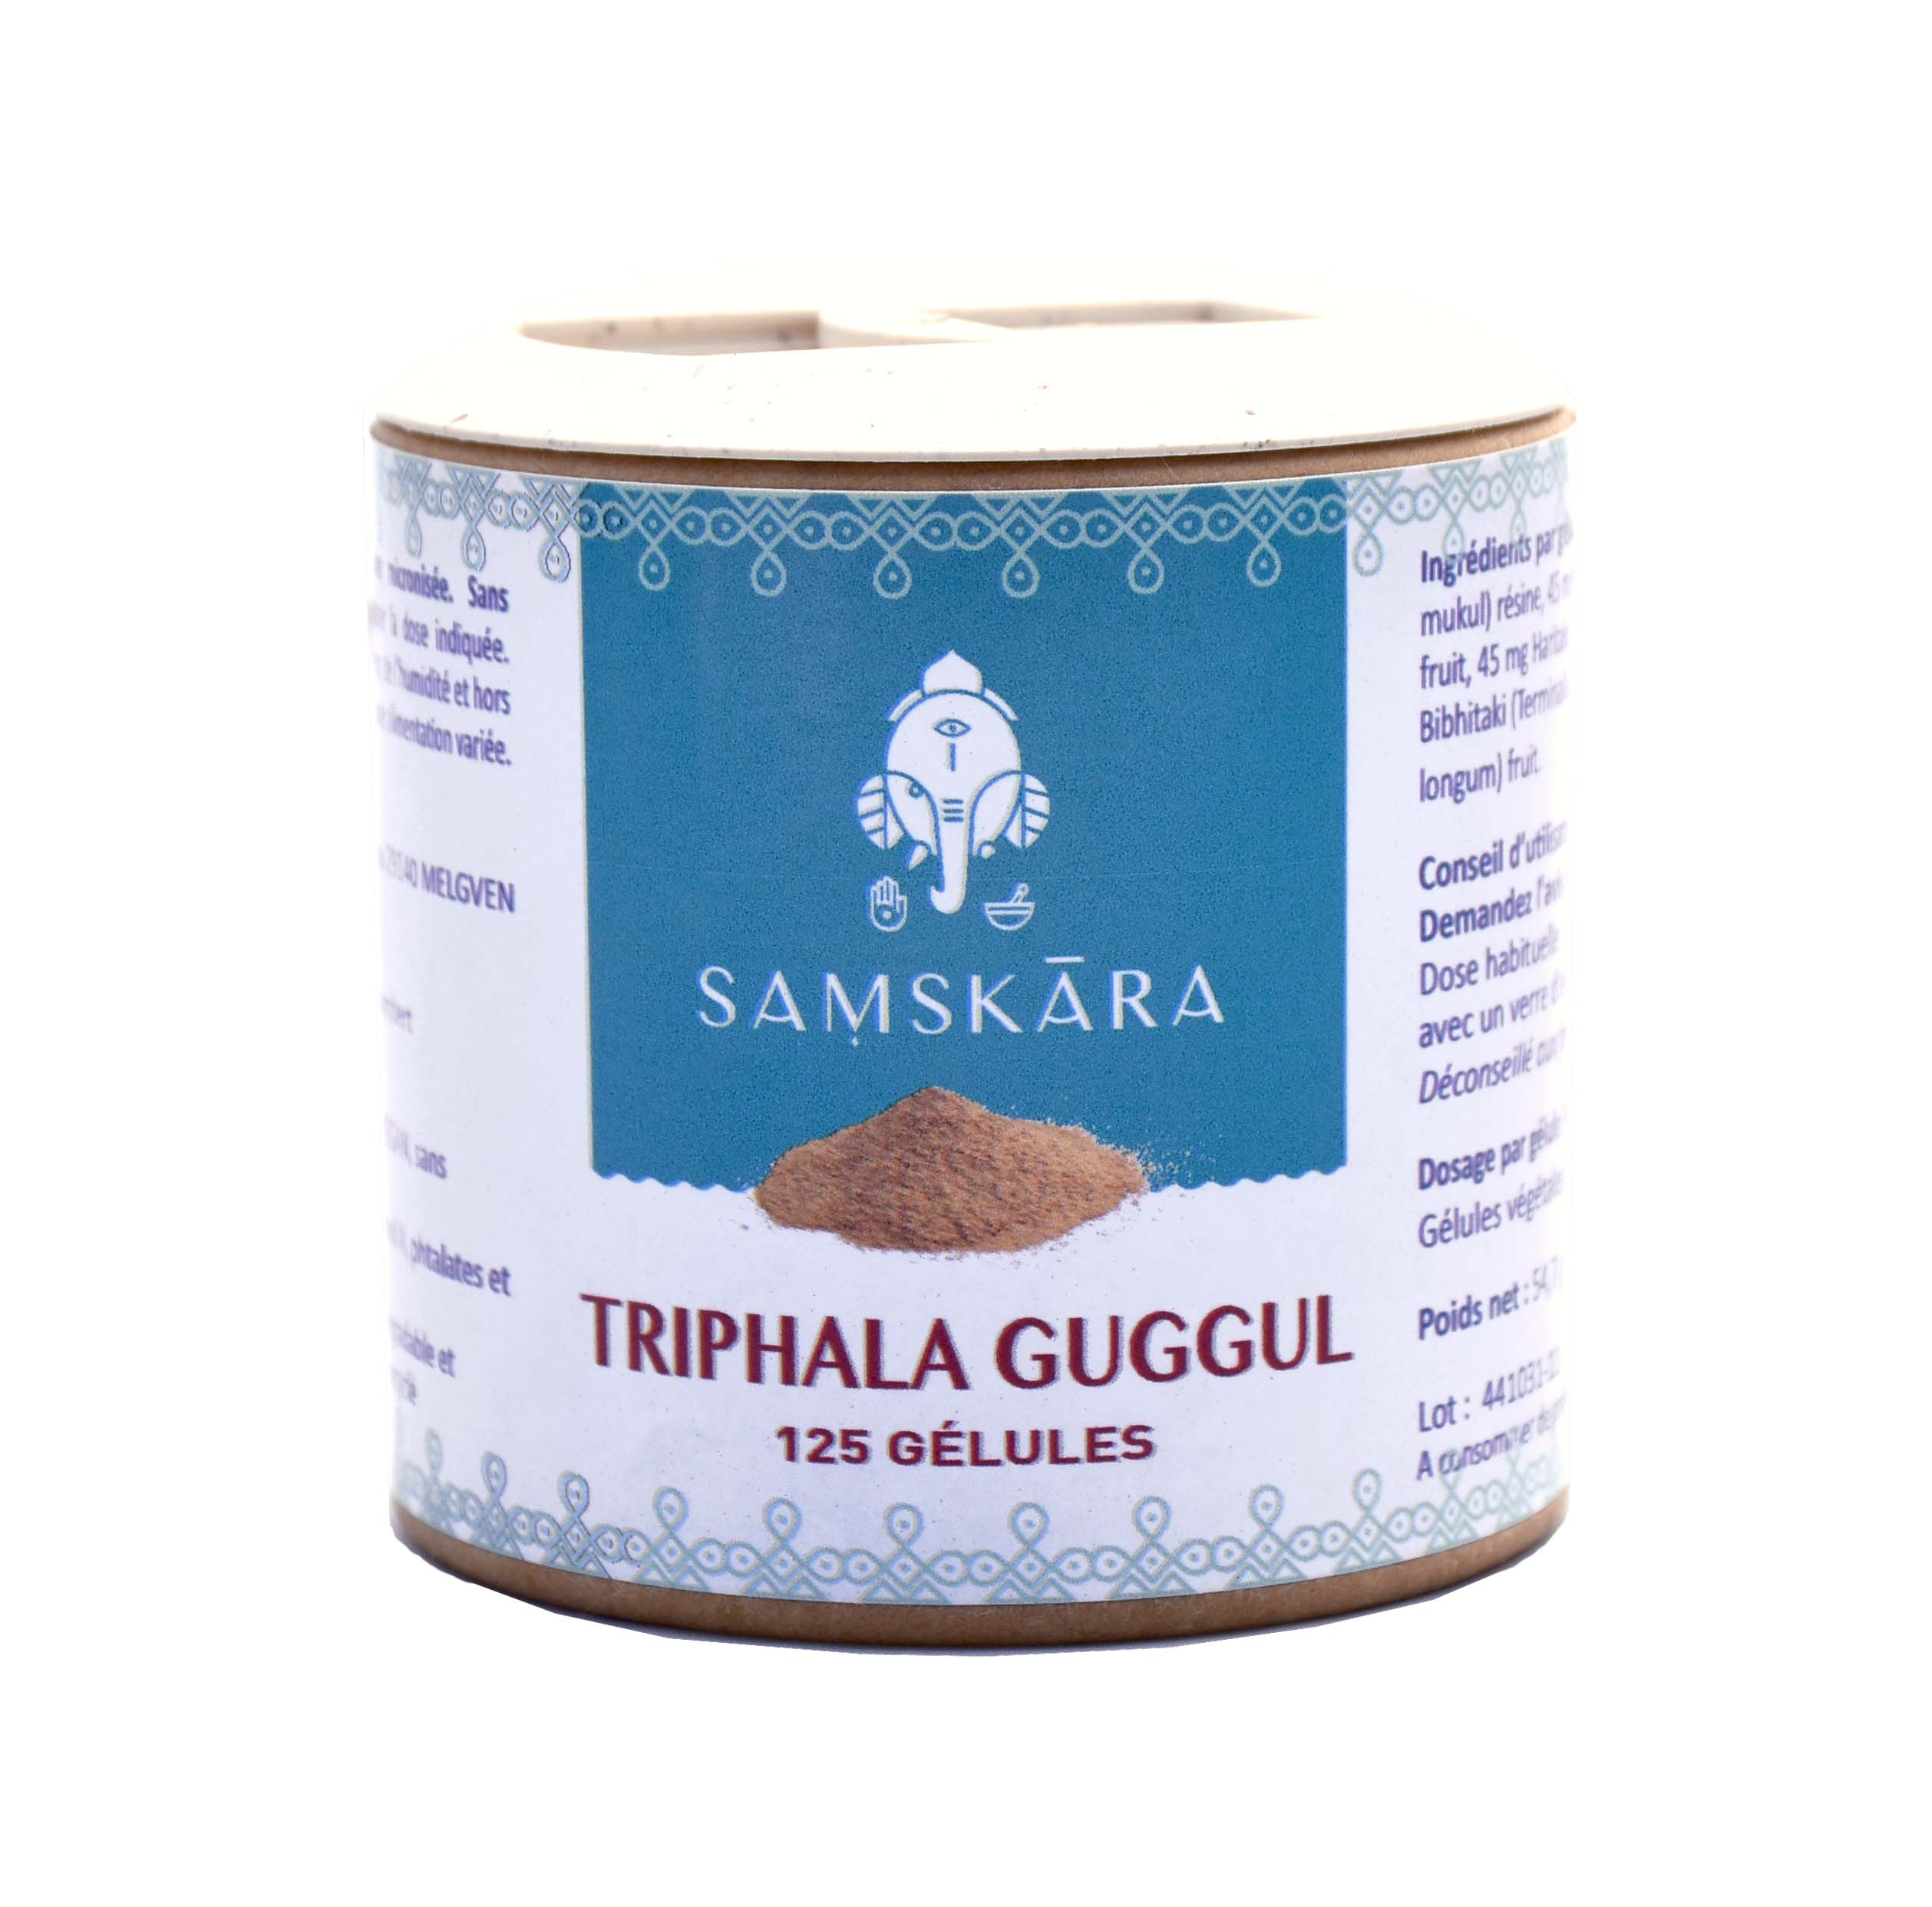 Triphala guggul 125 glules